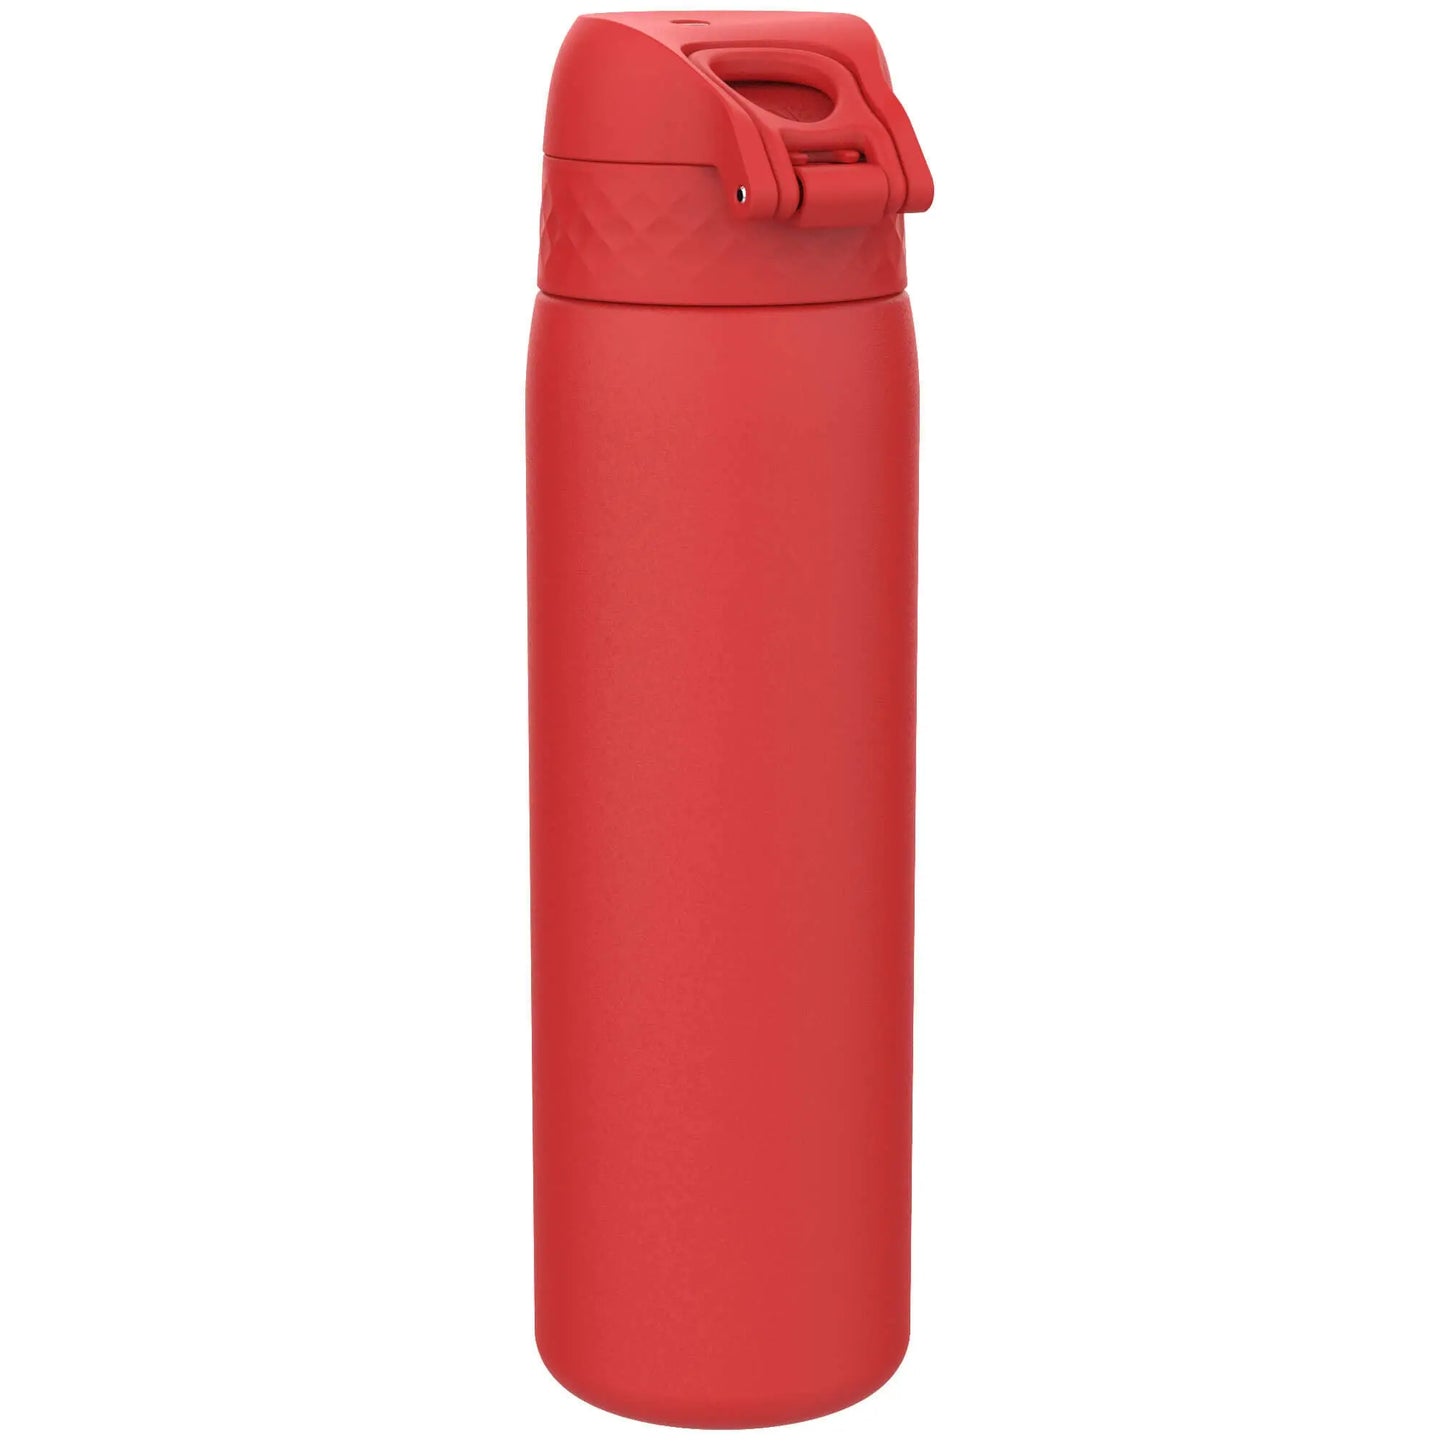 Leak Proof Slim Water Bottle, Stainless Steel, Red, 600ml (20oz) - ION8